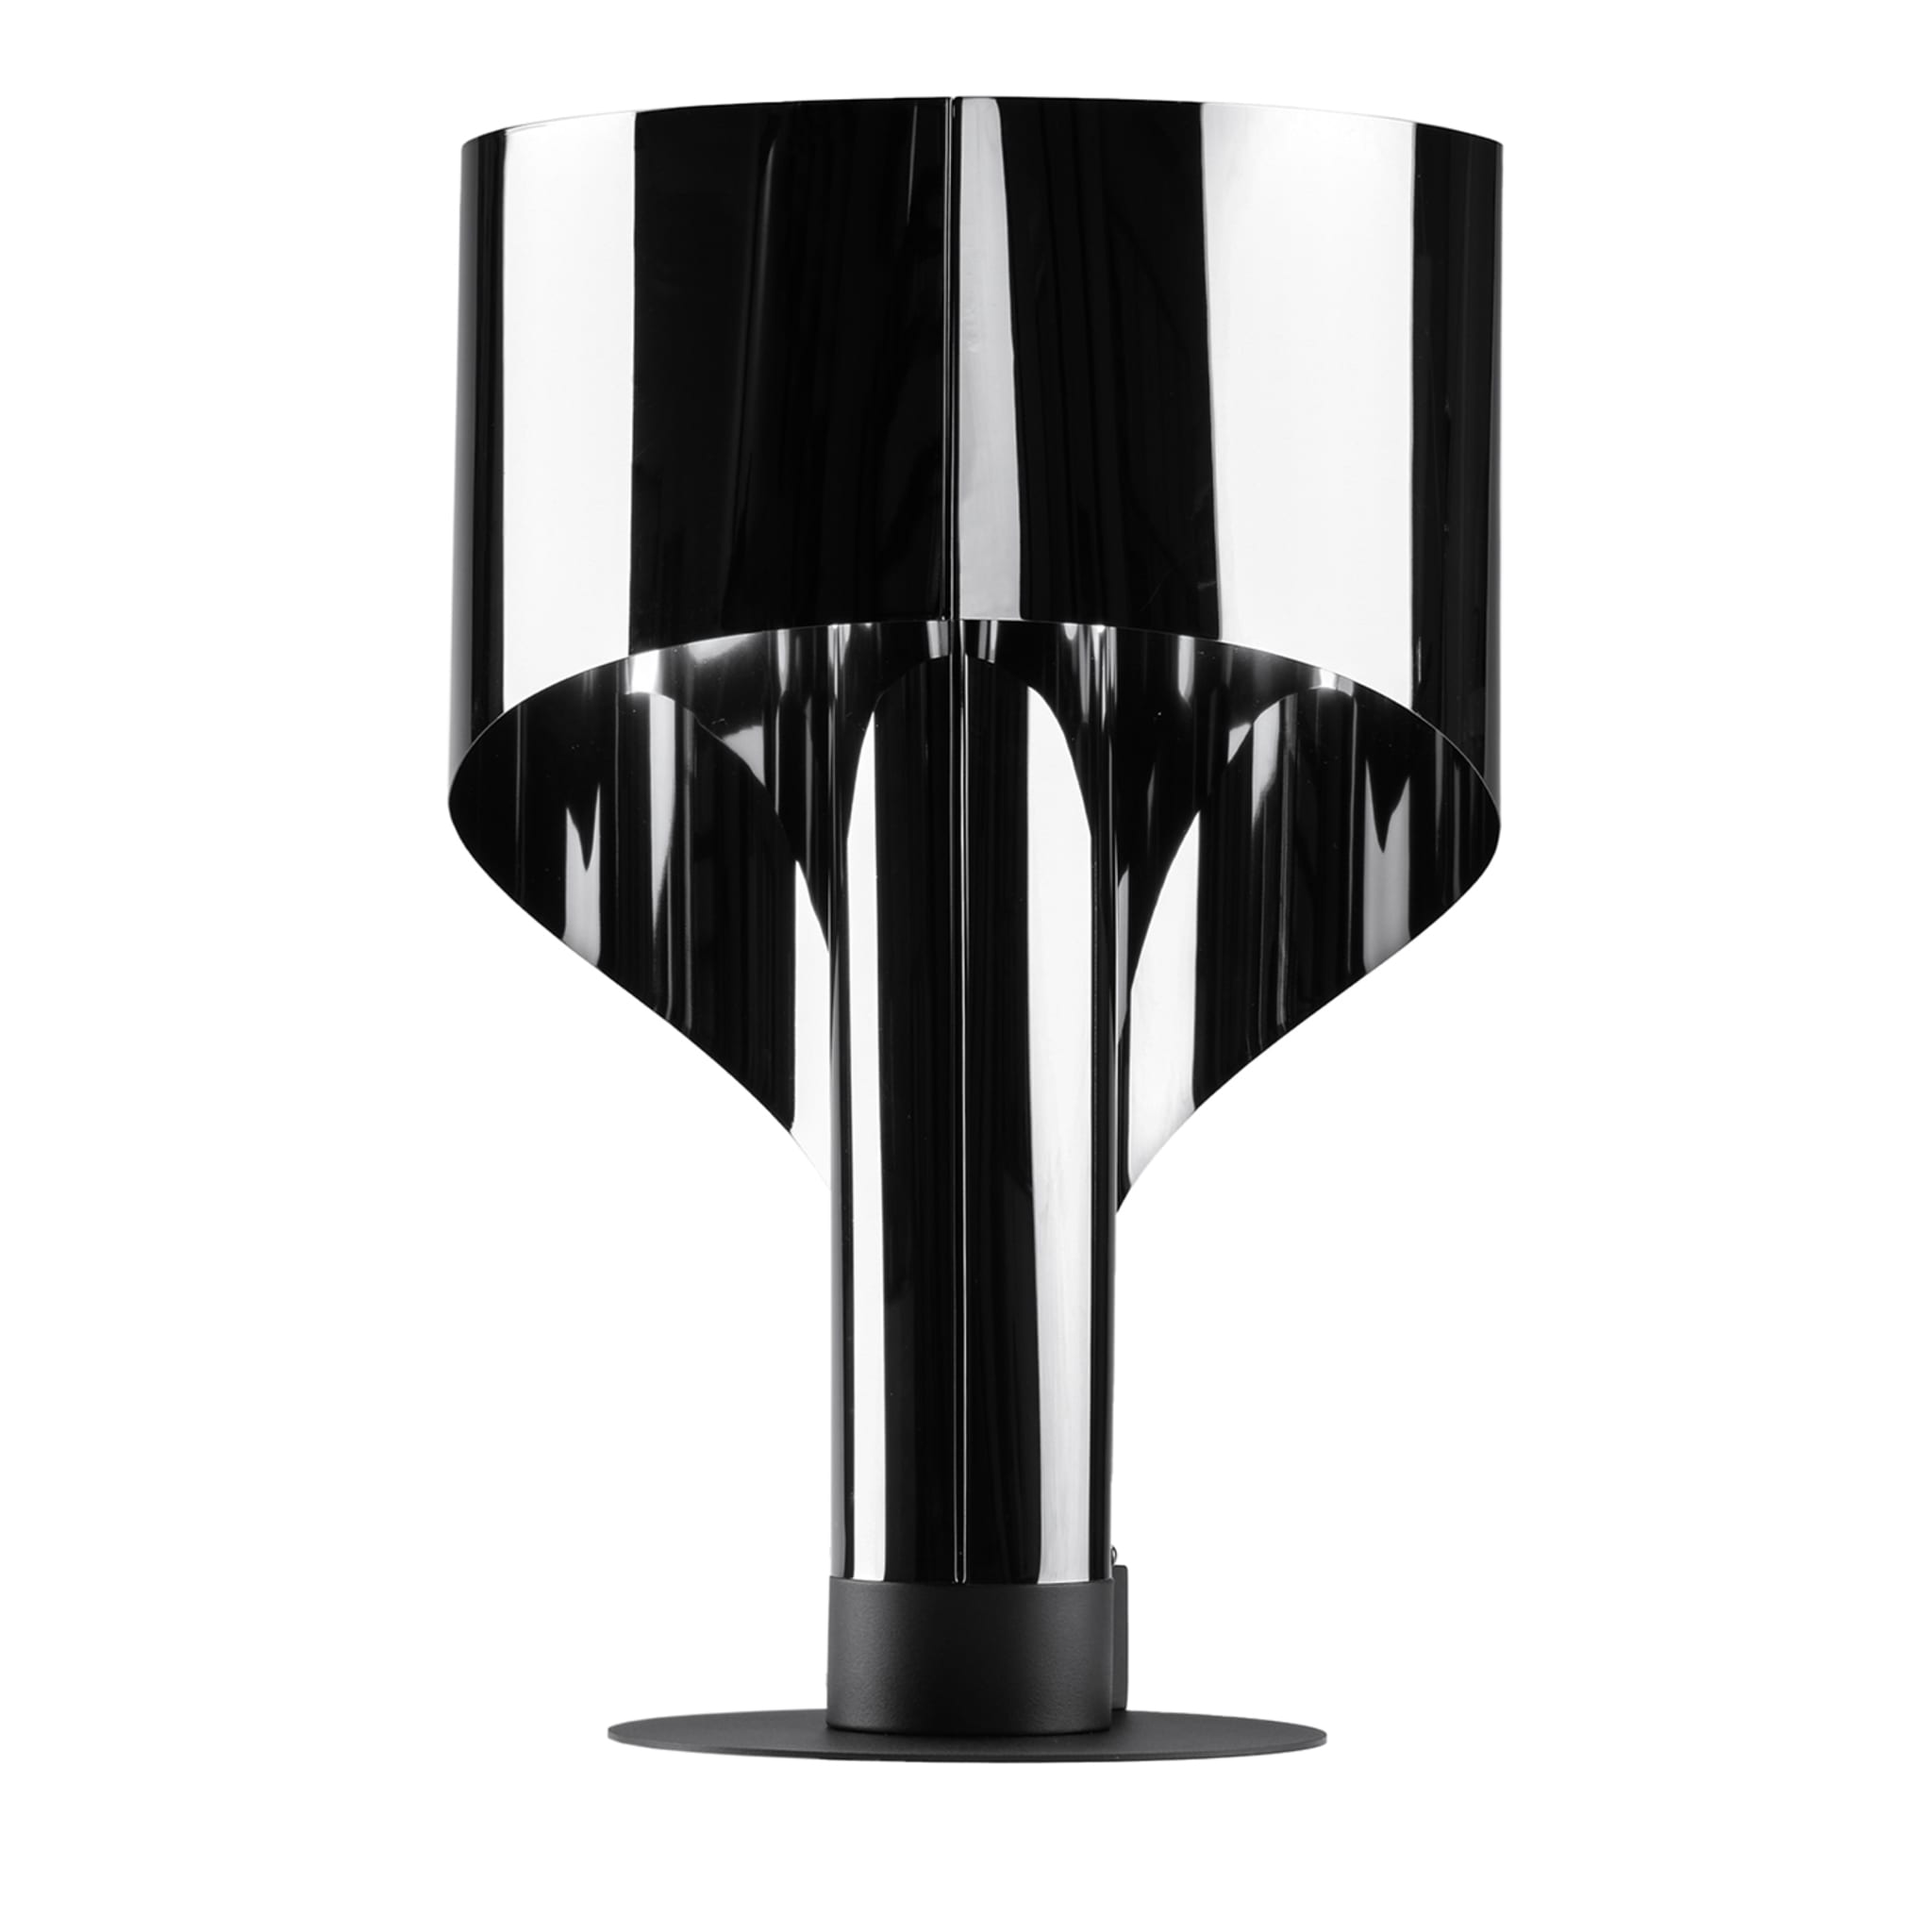  SPINNAKER black table lamp by Corsini Wiskemann - Main view